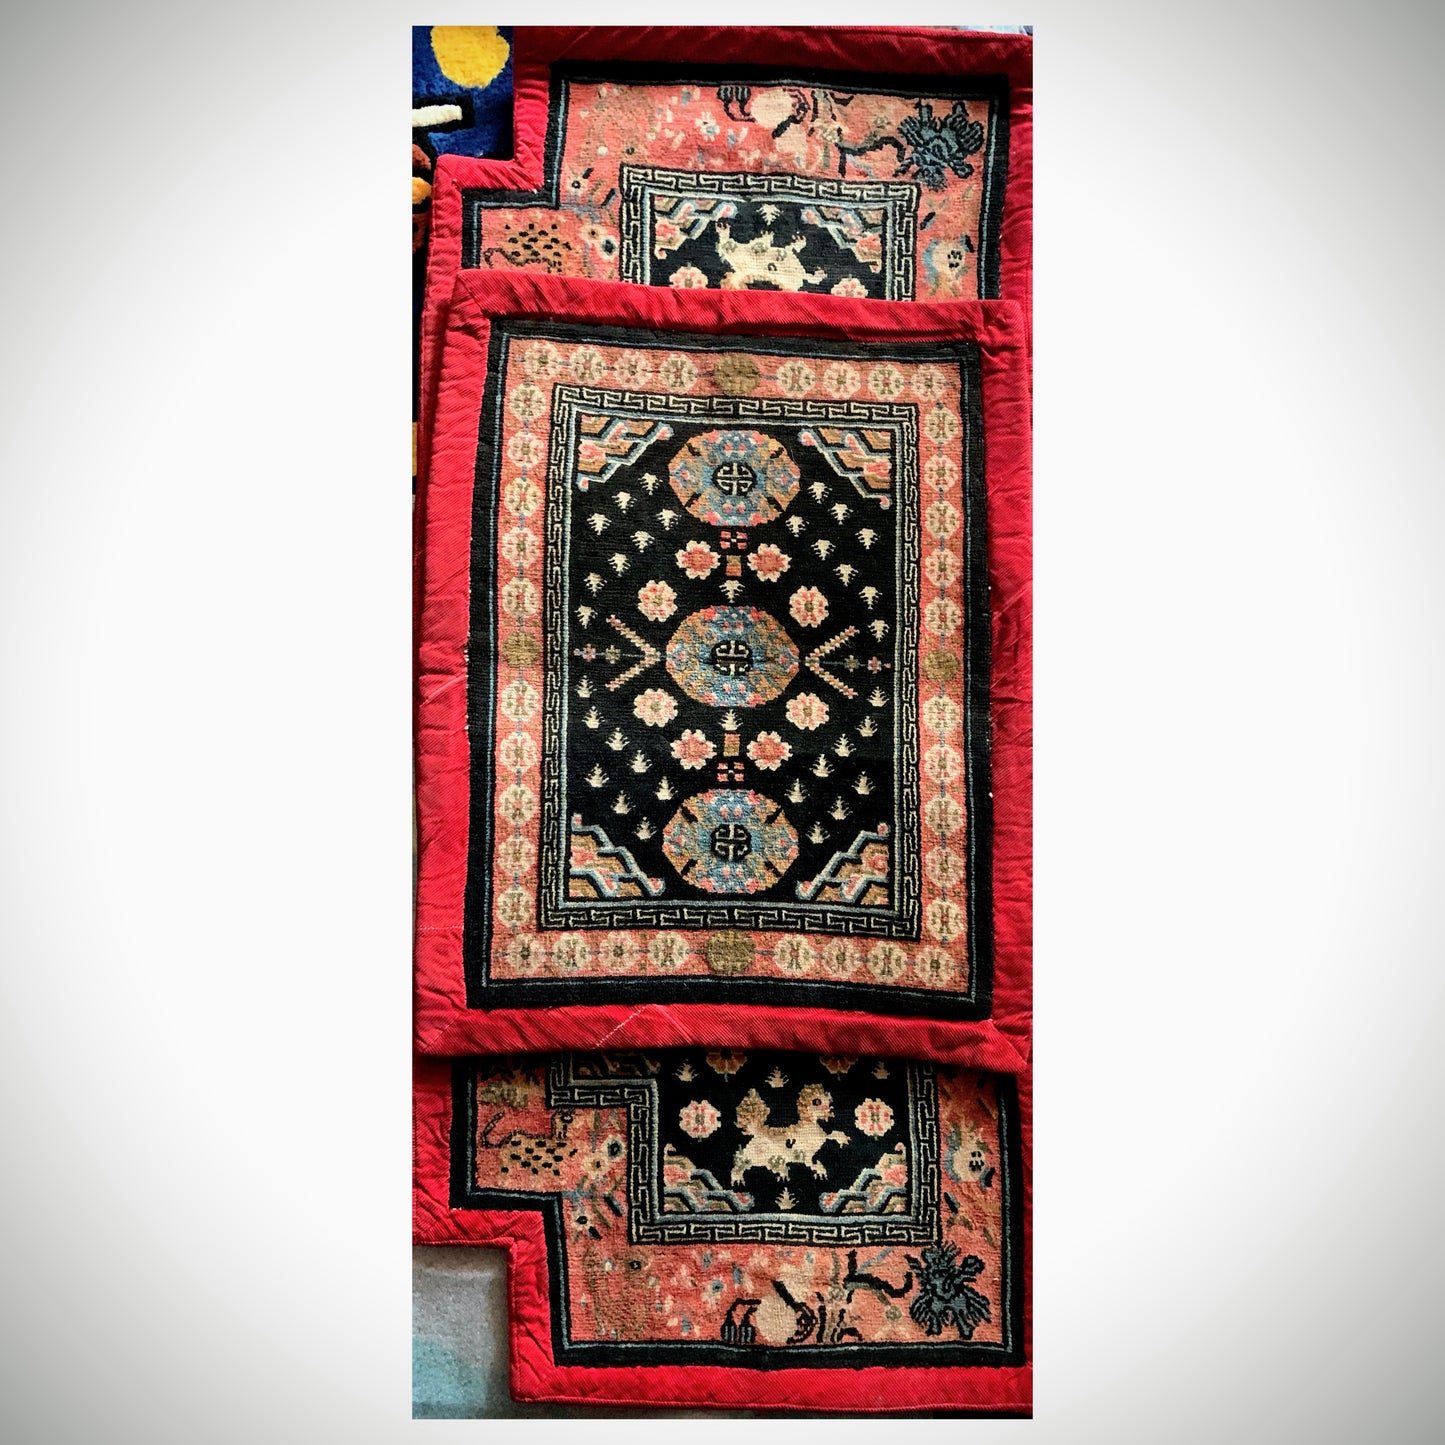 An antique Tibetan horse blanket carpet and saddle topper